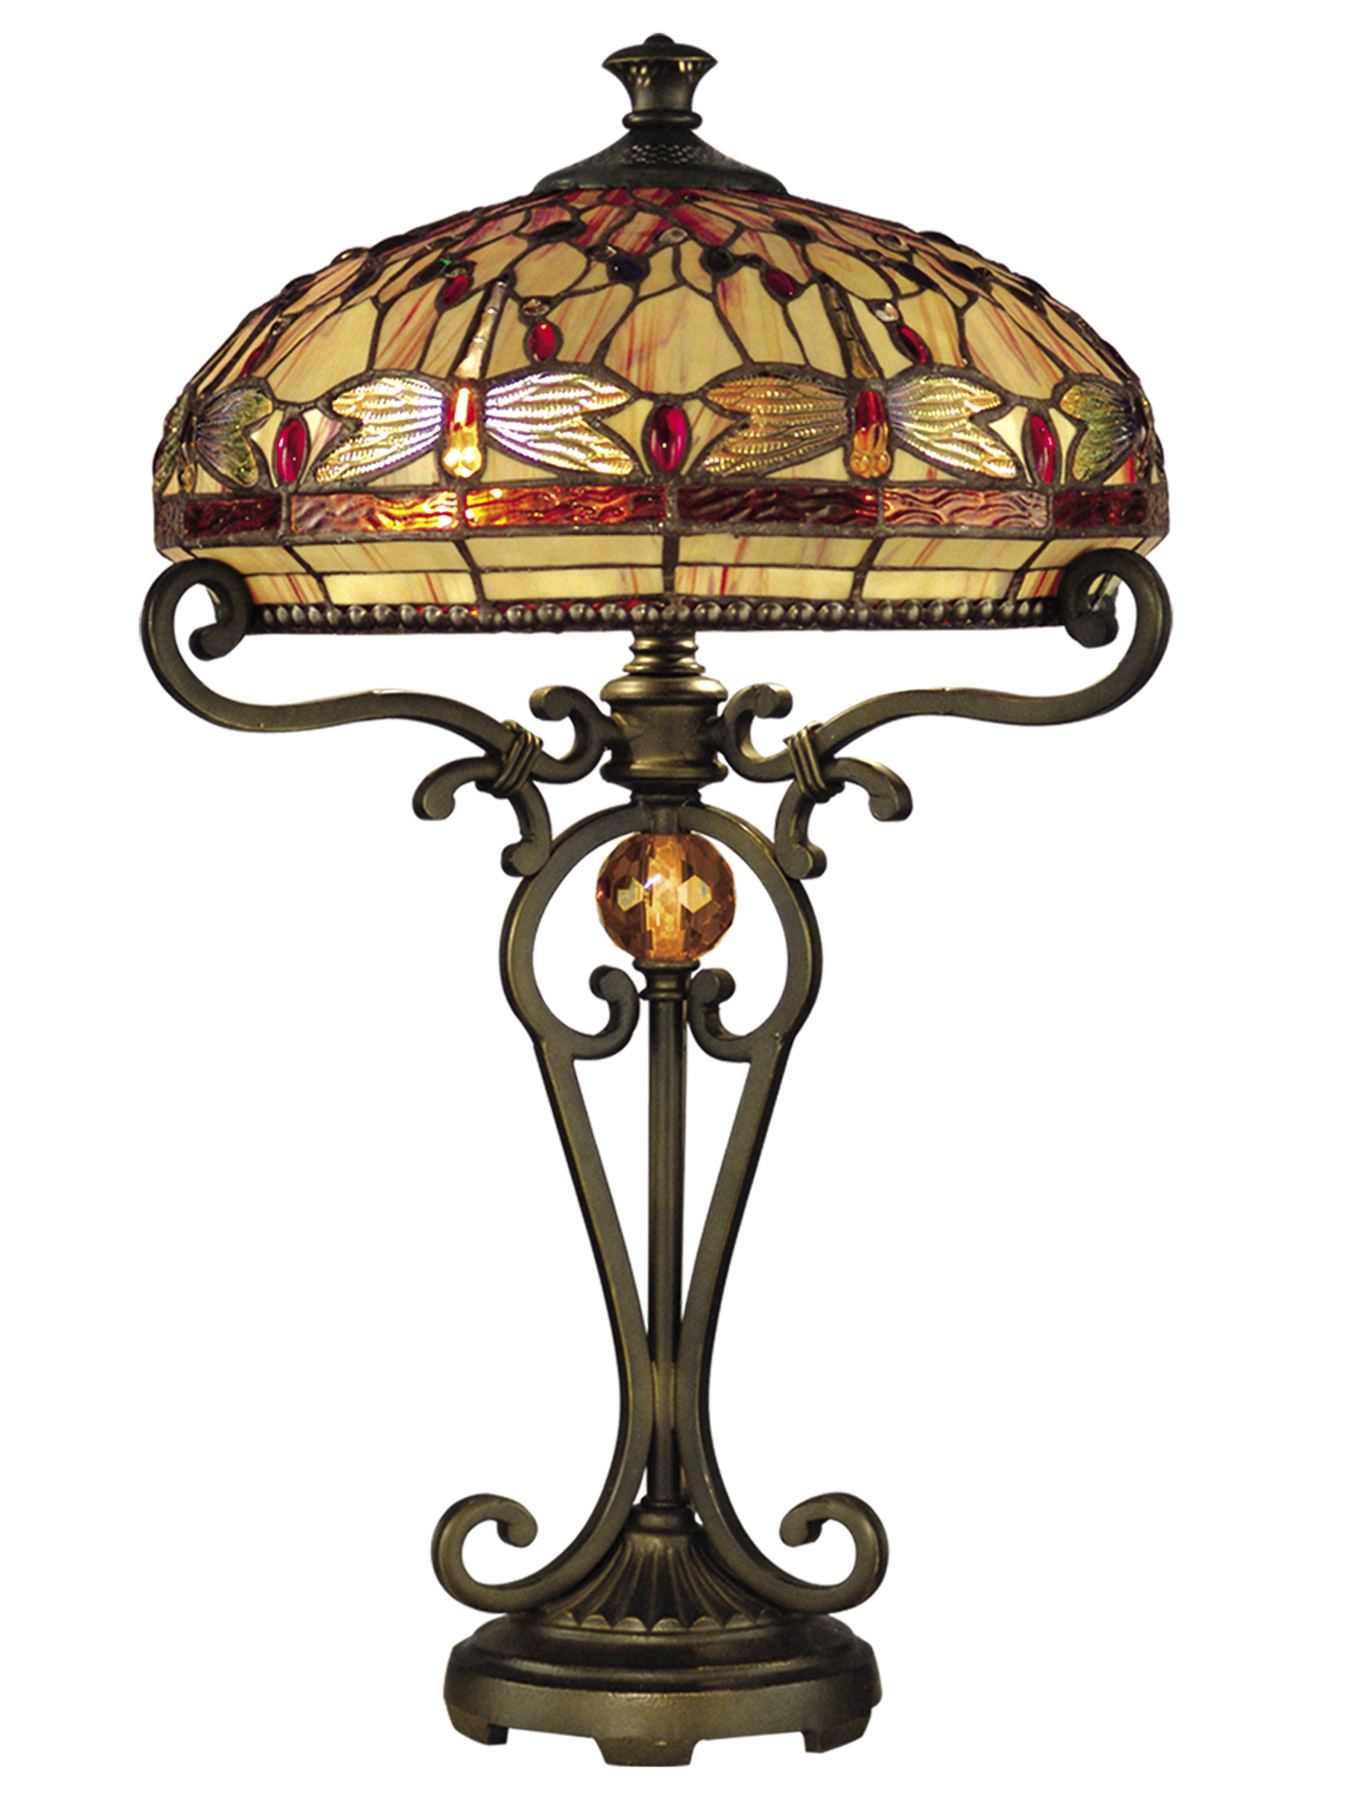 Dale Tiffany TT10095 Tiffany Dragonfly Table Lamp